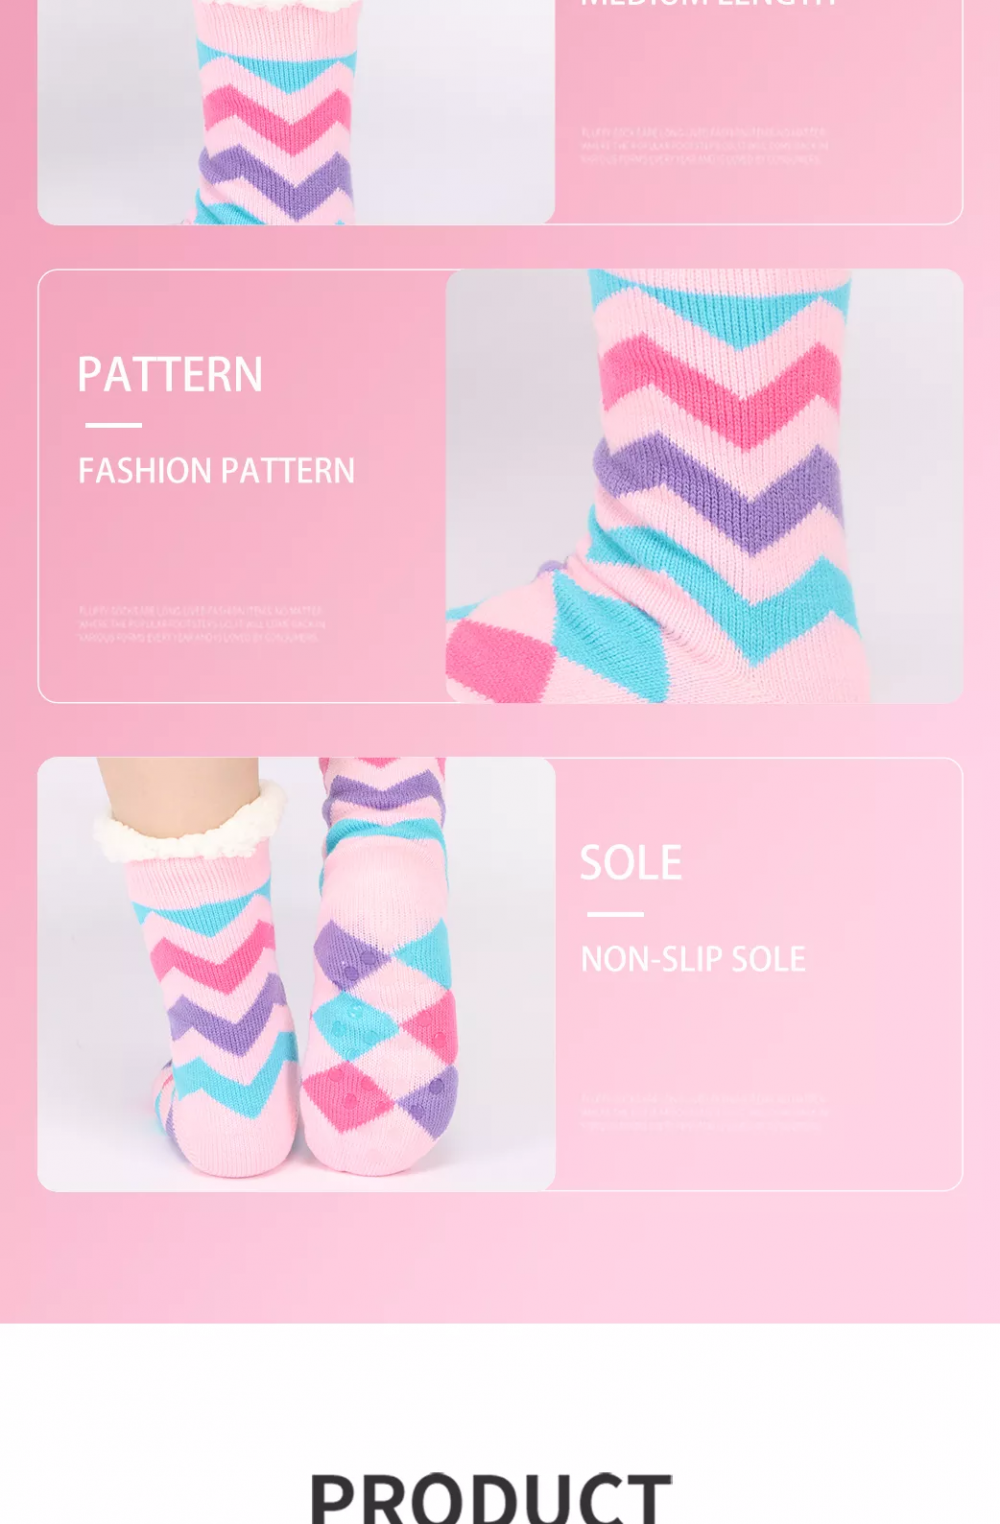 Cozy Plush Fleece Winter Socks